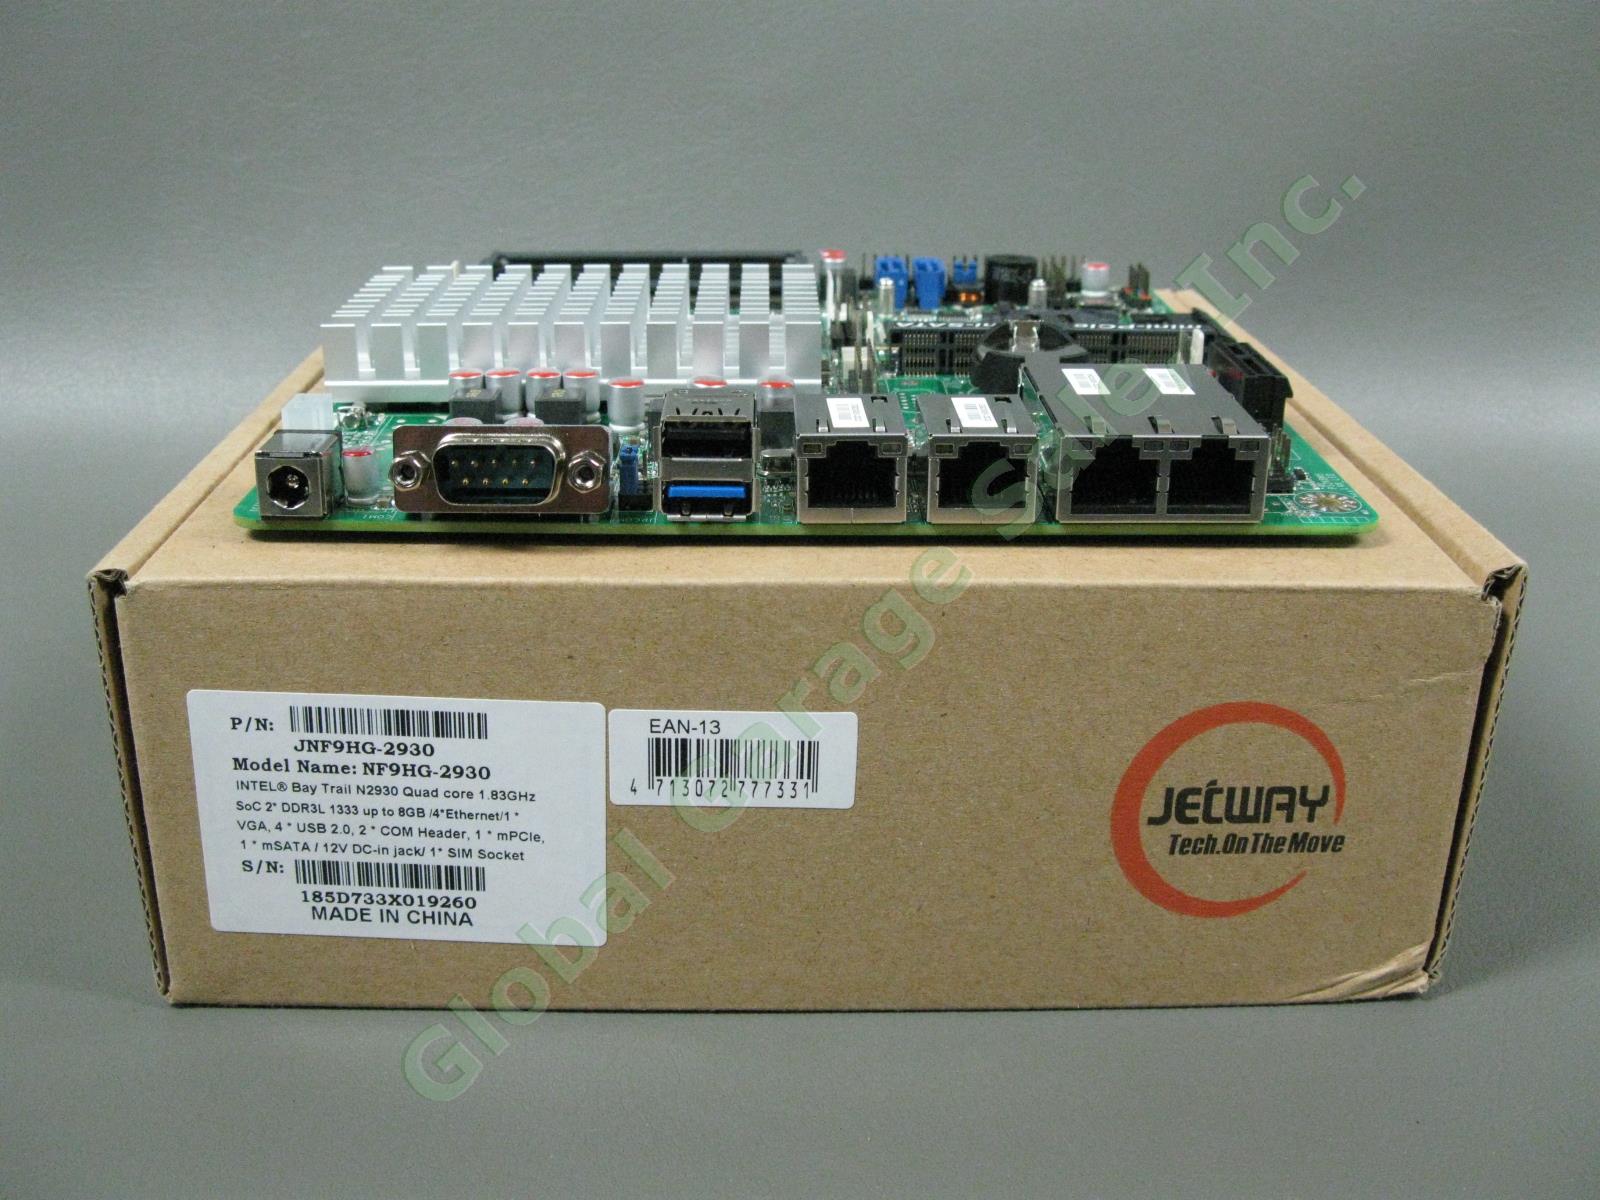 Jetway NF9HG-2930 Intel Quad Core LAN Thin Mini-ITX Networking Main Motherboard